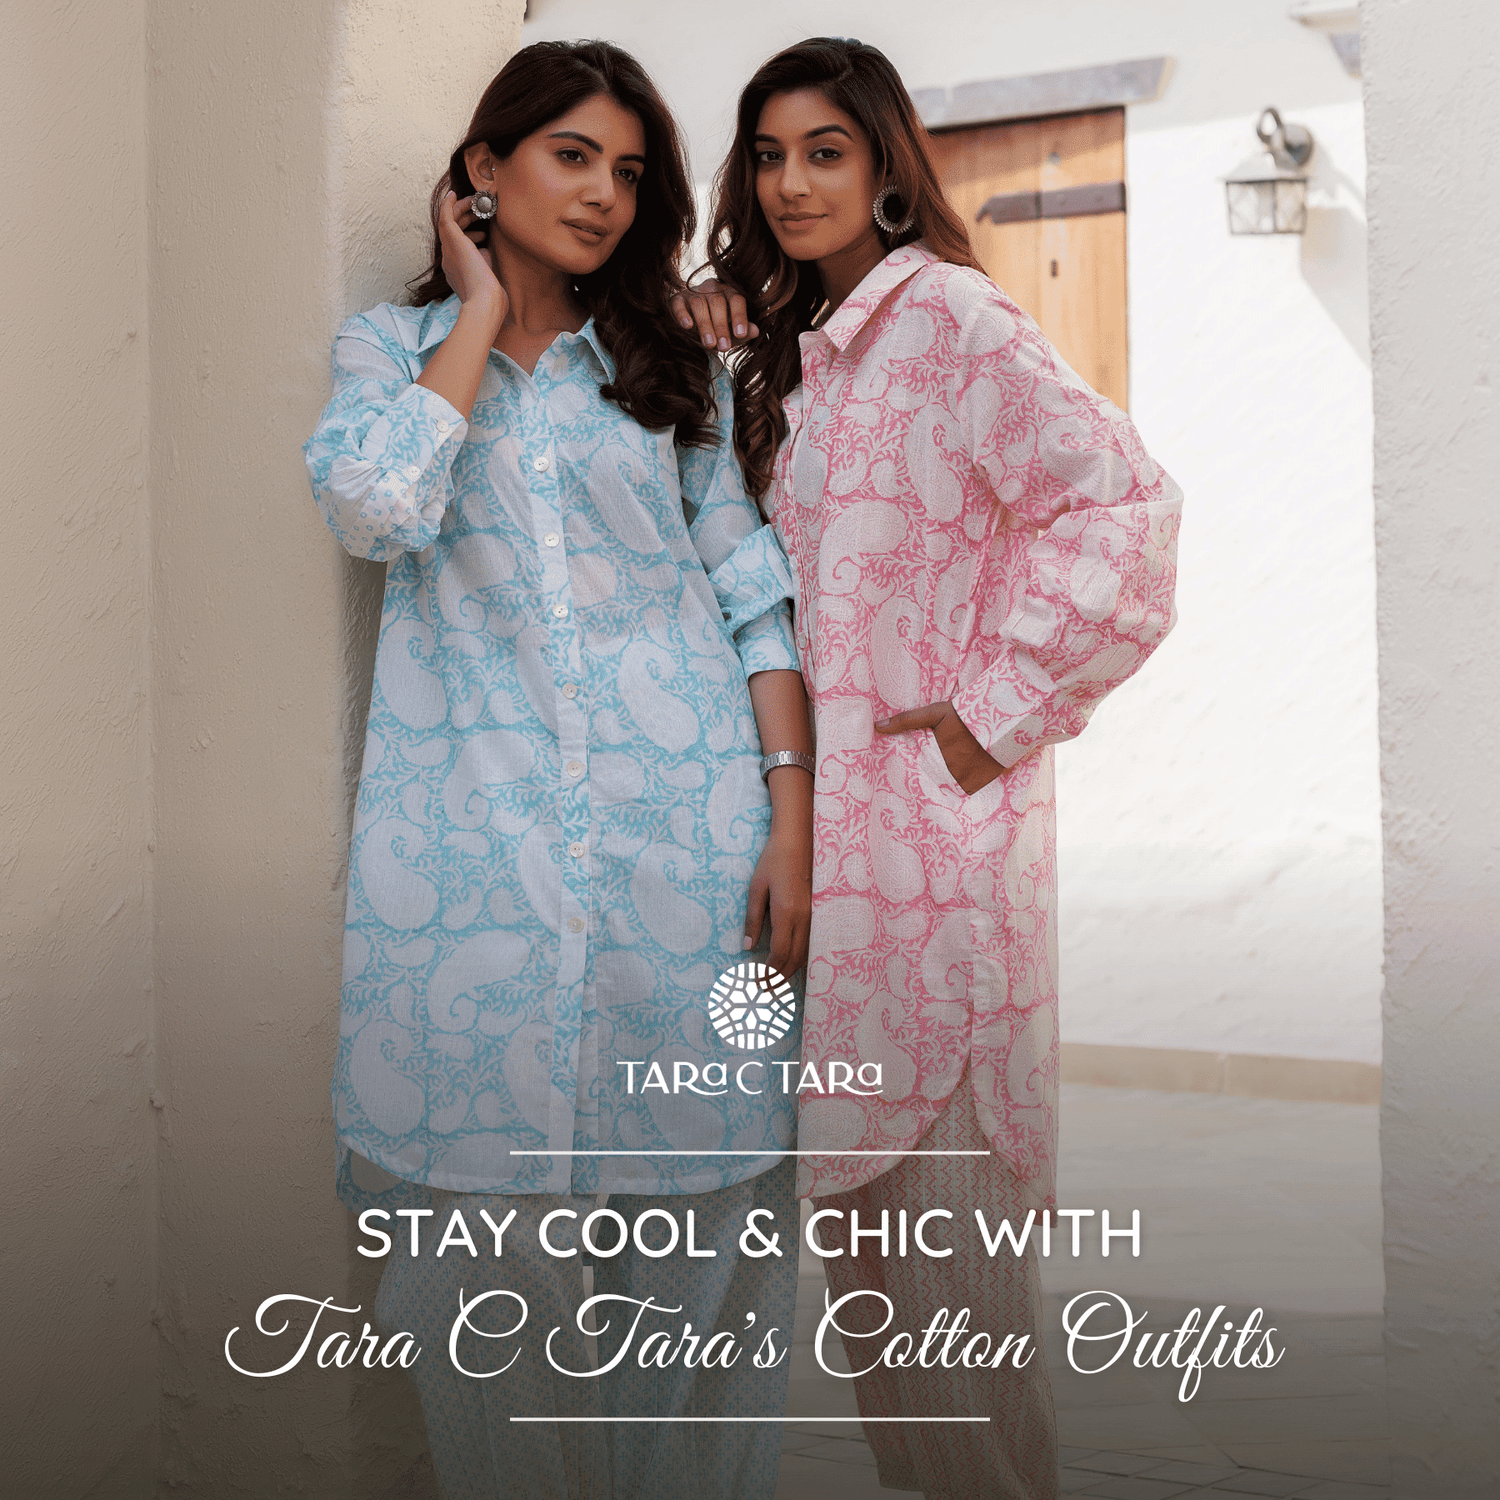 Stay Cool and Chic with Tara C Tara's Cotton Outfits - Tara-C-Tara